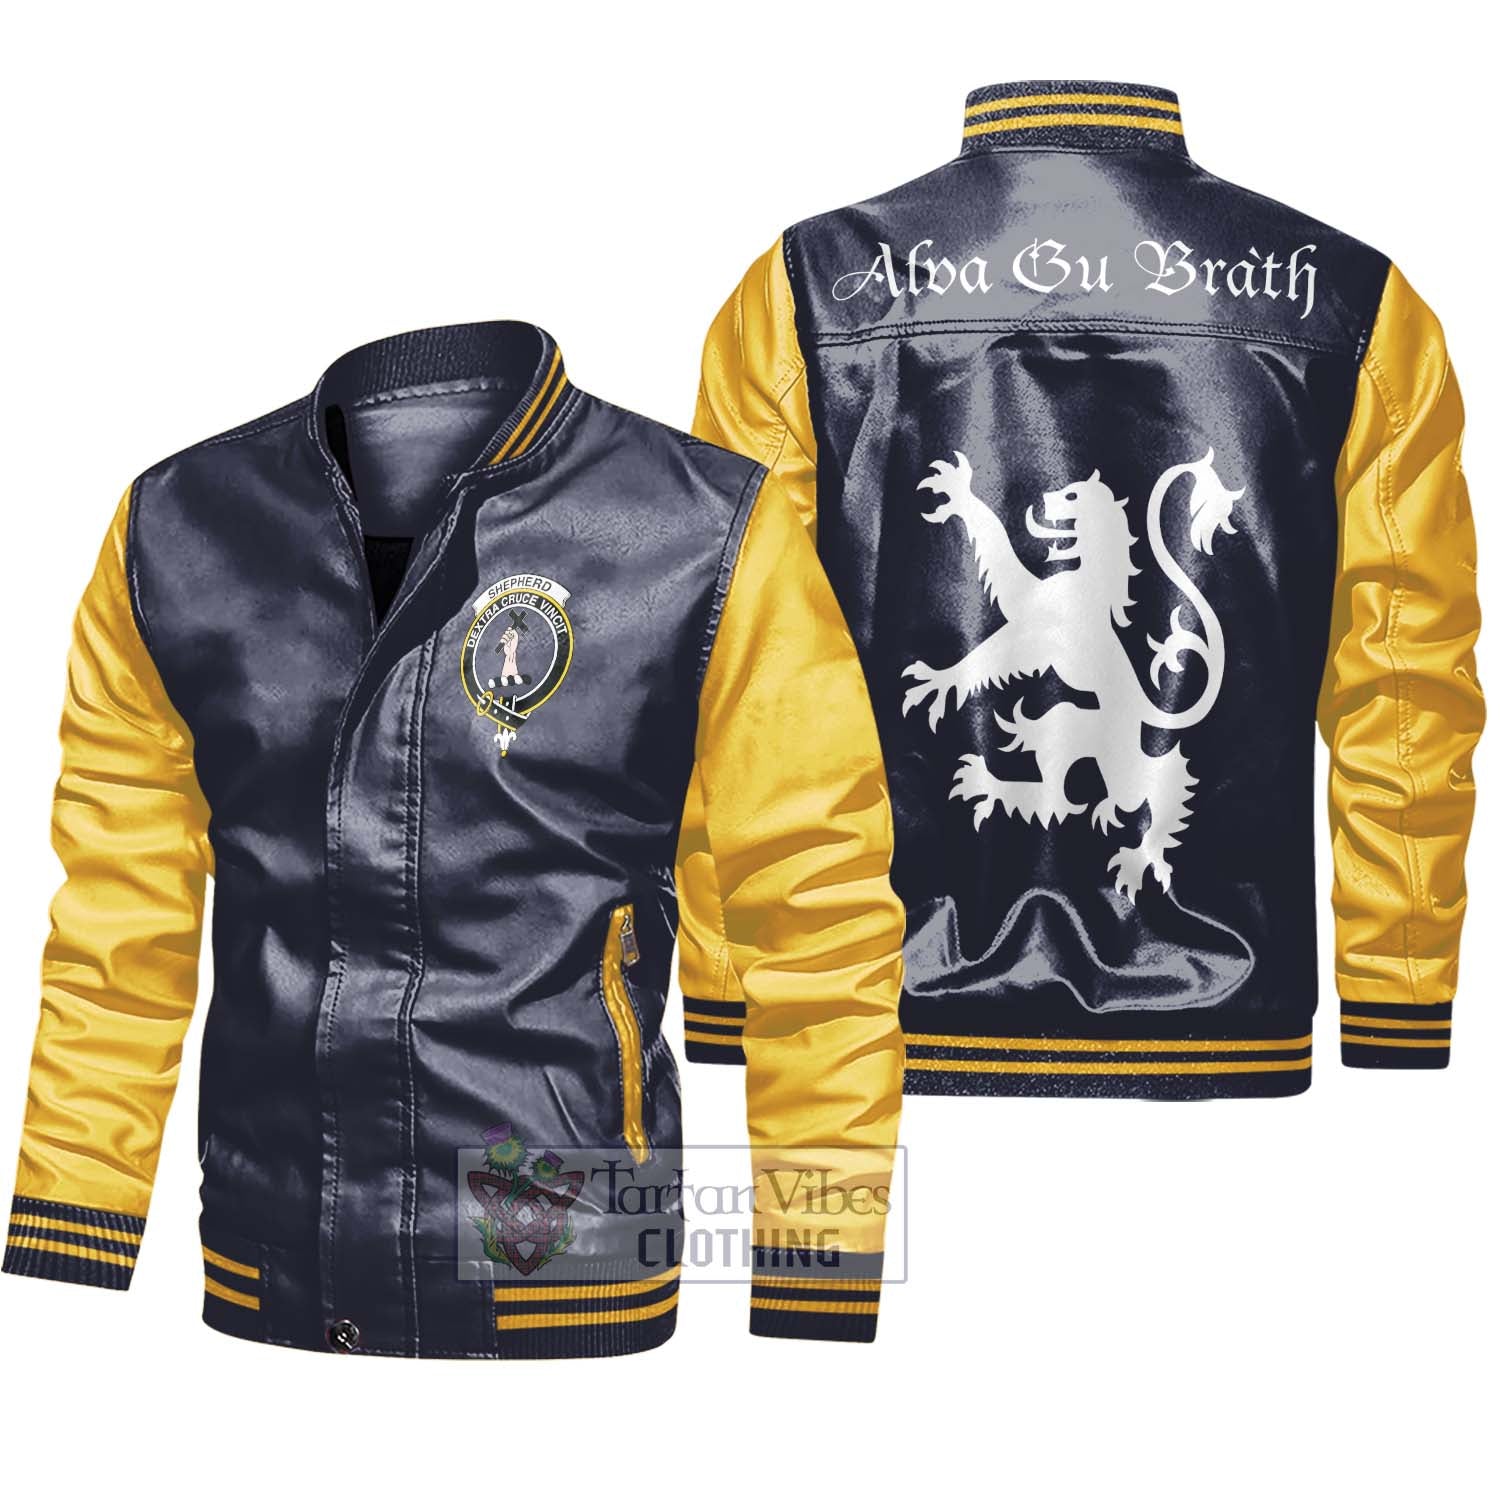 Tartan Vibes Clothing Shepherd Family Crest Leather Bomber Jacket Lion Rampant Alba Gu Brath Style